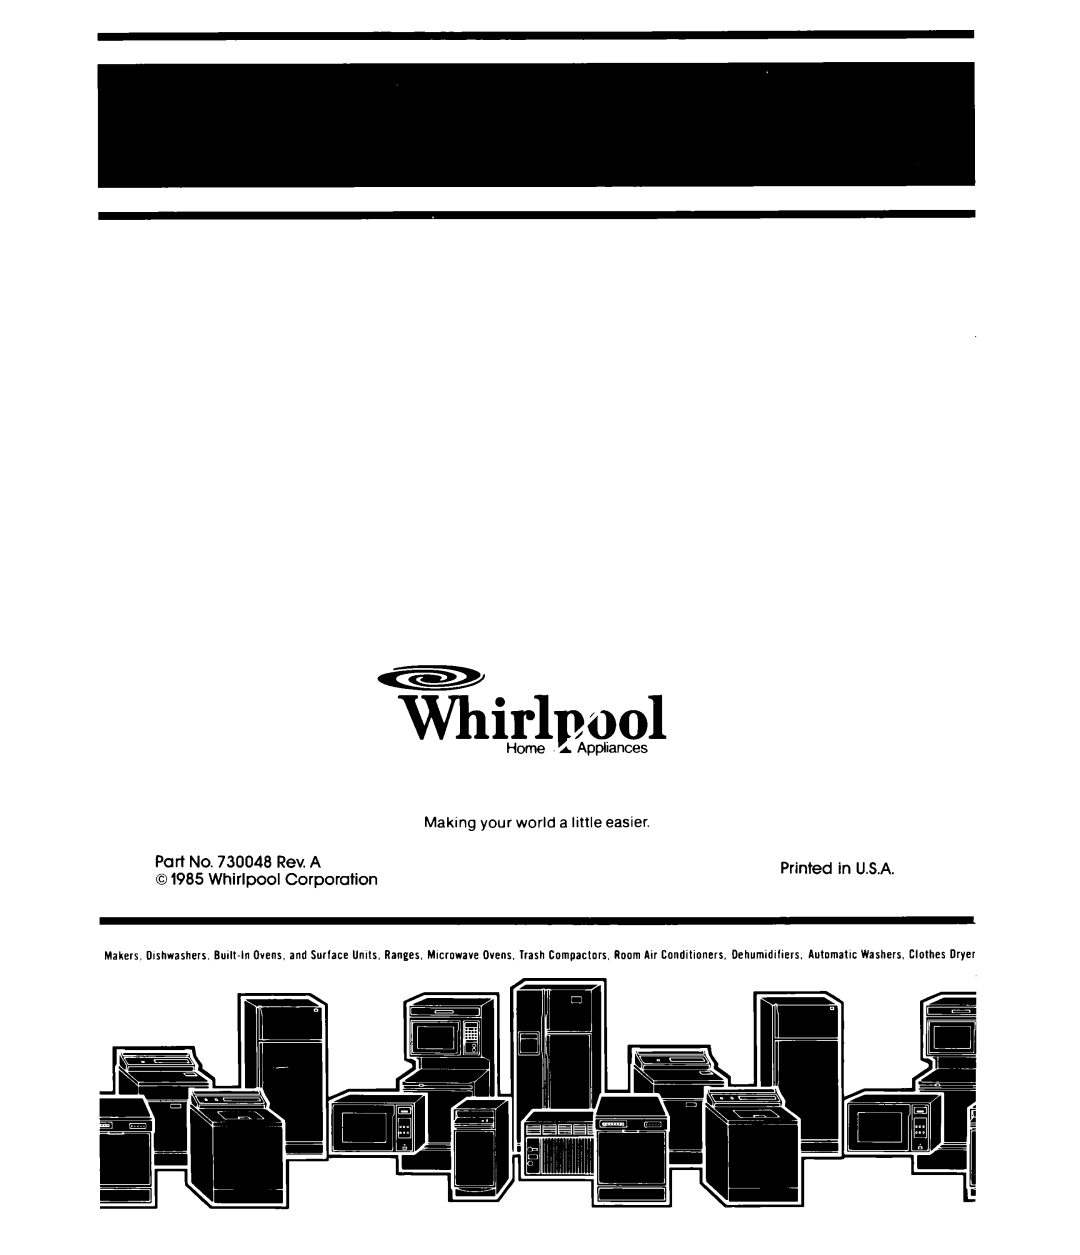 Whirlpool EHOSOF, EHOGOF manual YLirlpool, Part No. 730048 Rev. A, 0 1985 Whirlpool, Corporation, Home 